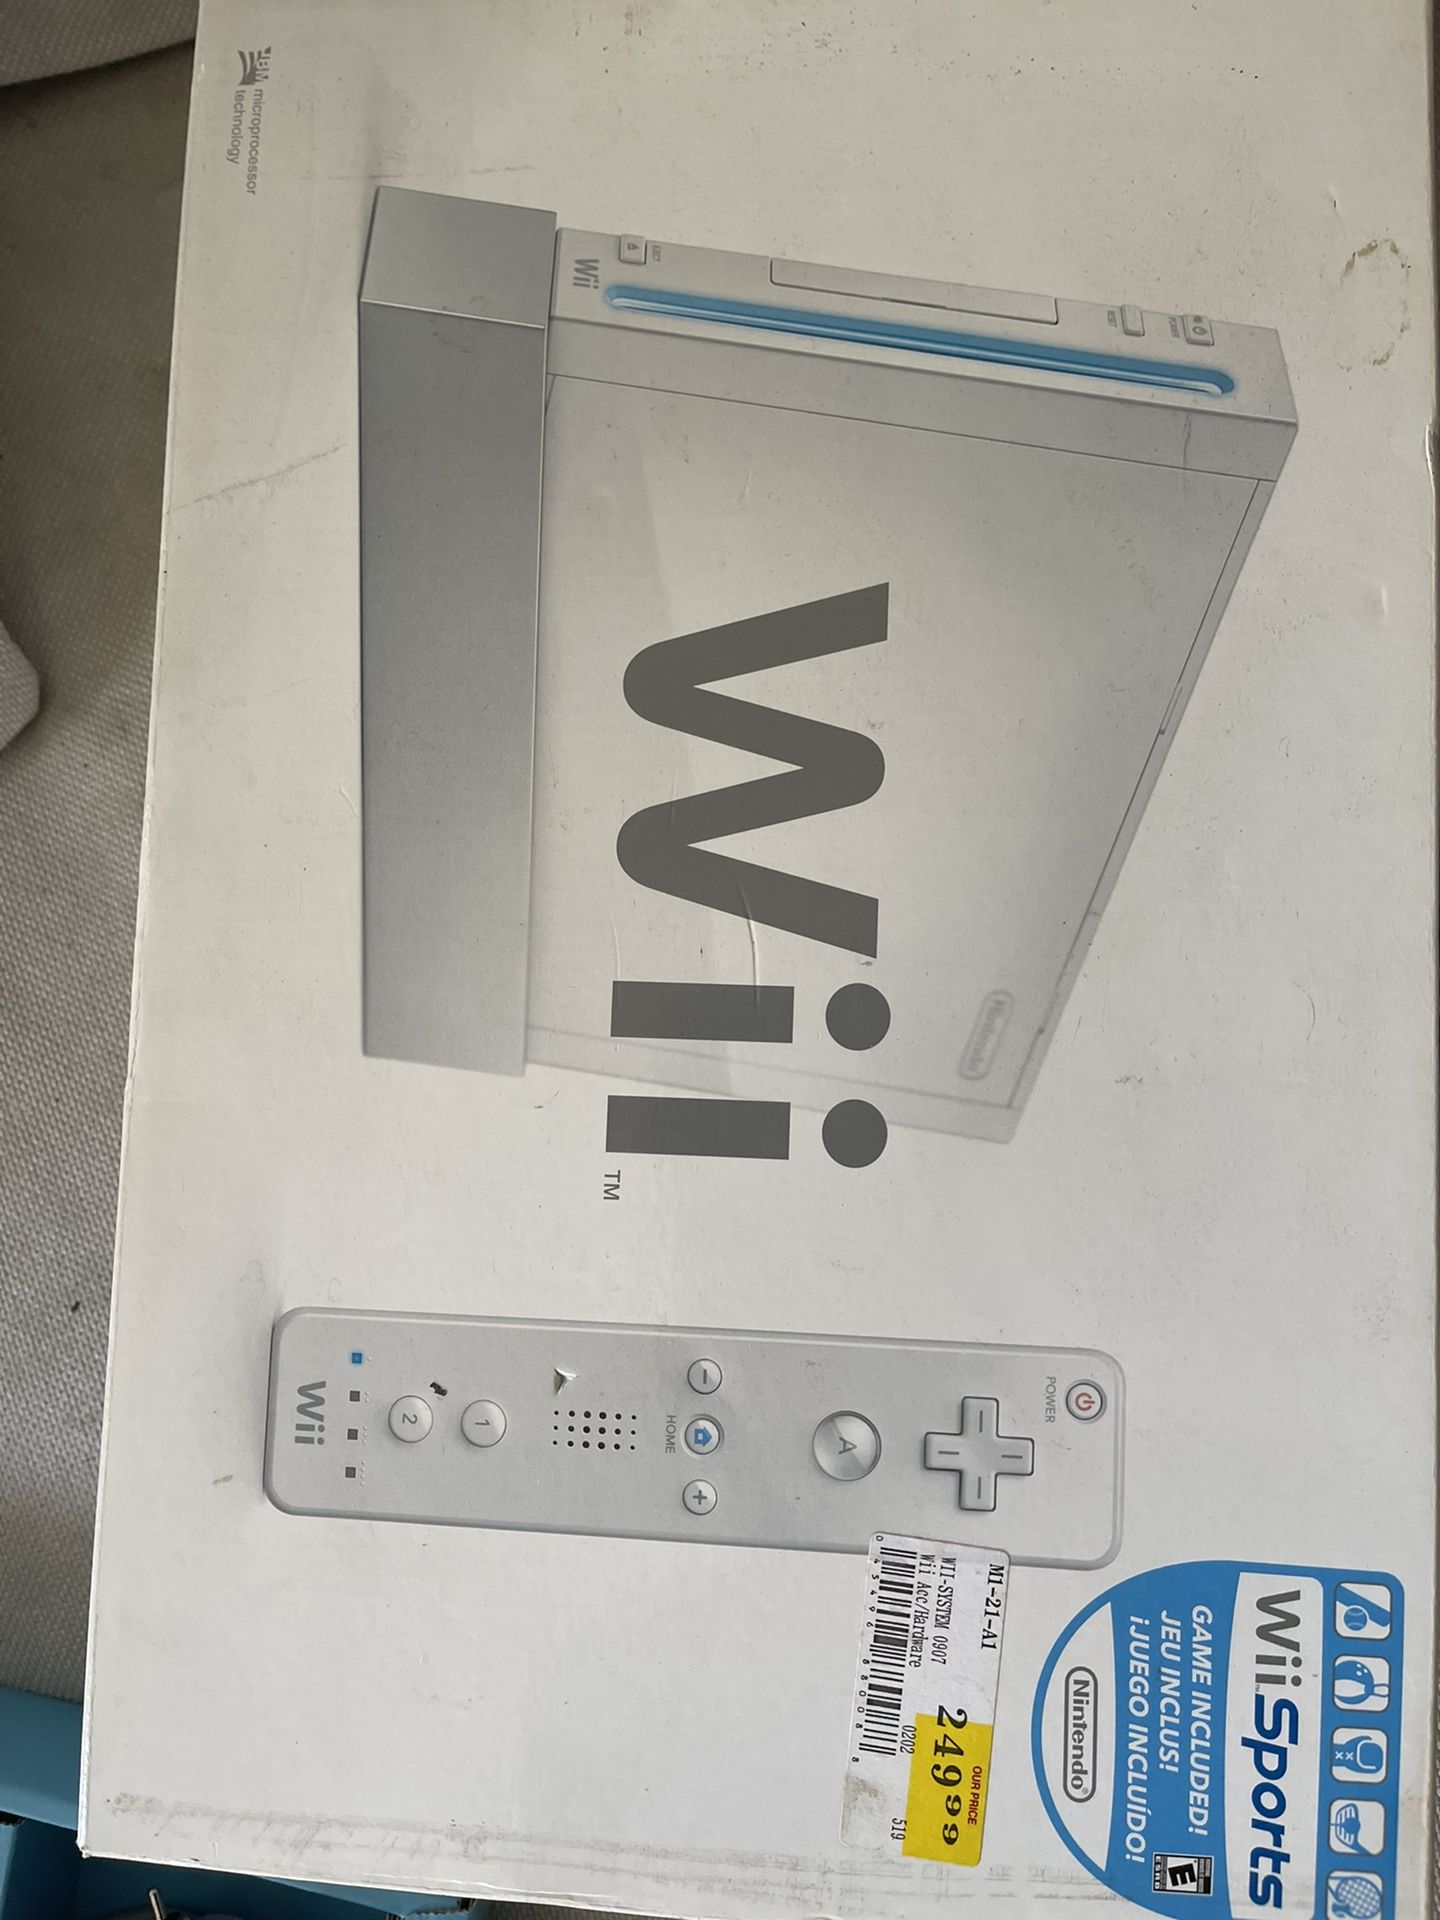 Nintendo Wii w/ HDMI converter for Smart TVs